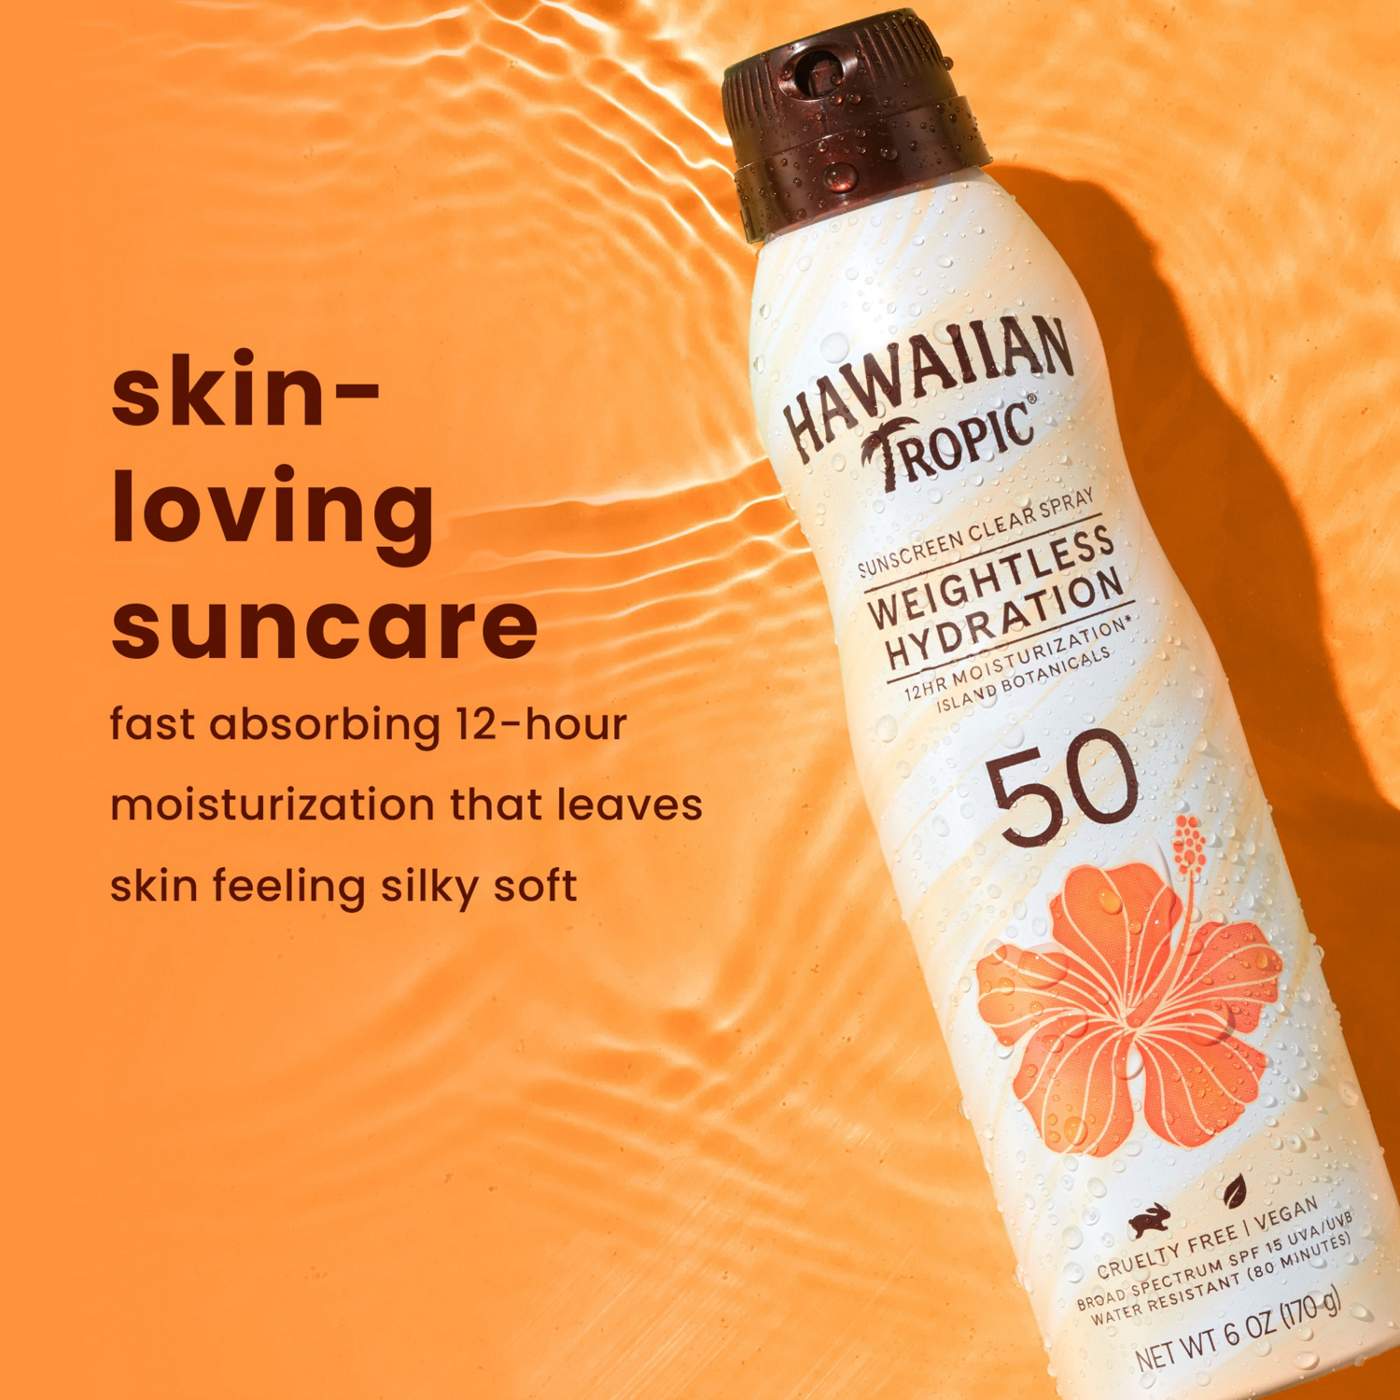 Hawaiian Tropic Weightless Hydration Clear Sunscreen Spray - SPF 50; image 5 of 8